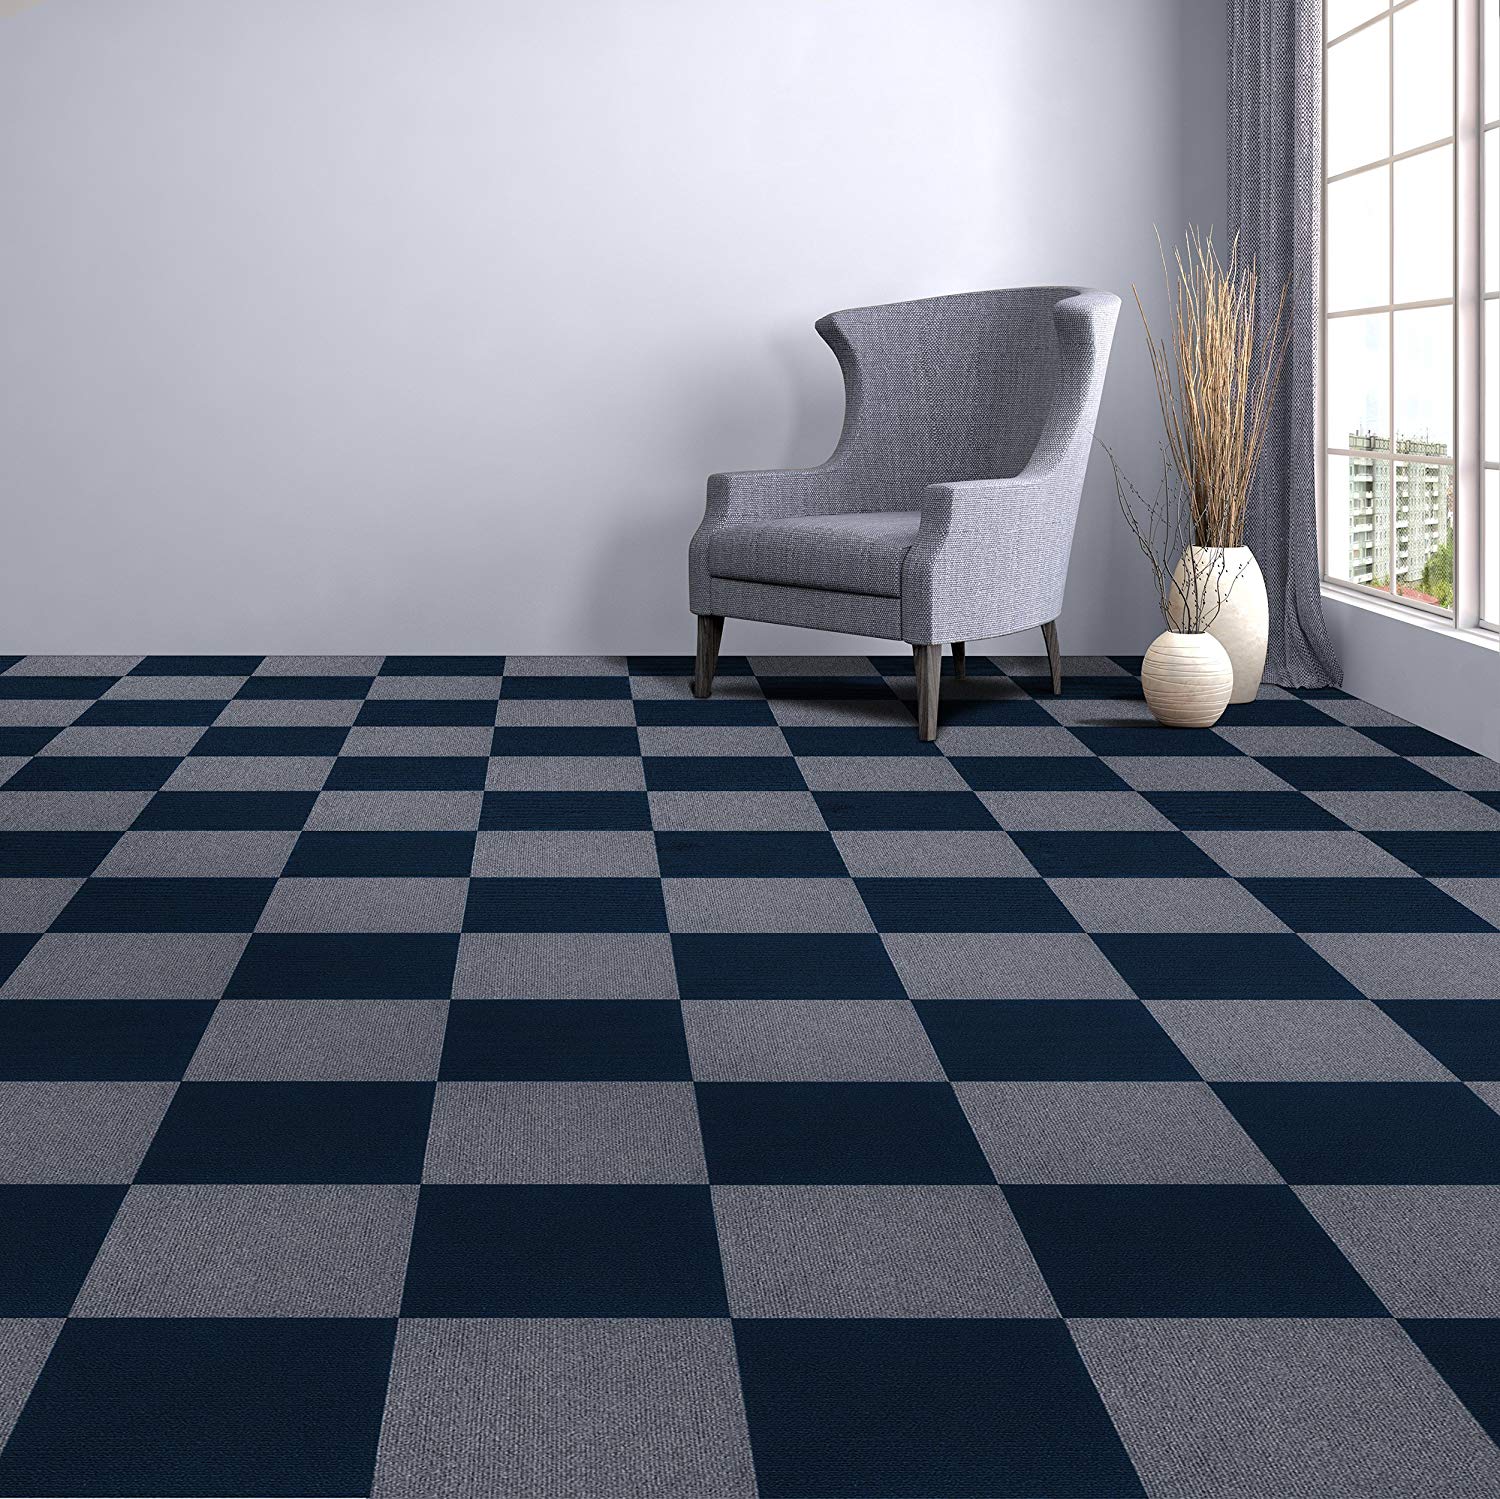 PowerSellerUSA Self-Adhesive Luxury DIY Peel & Stick Carpet Floor Tiles,12" x 12", 1-Pack 12 Tiles, Naxy Sapphire